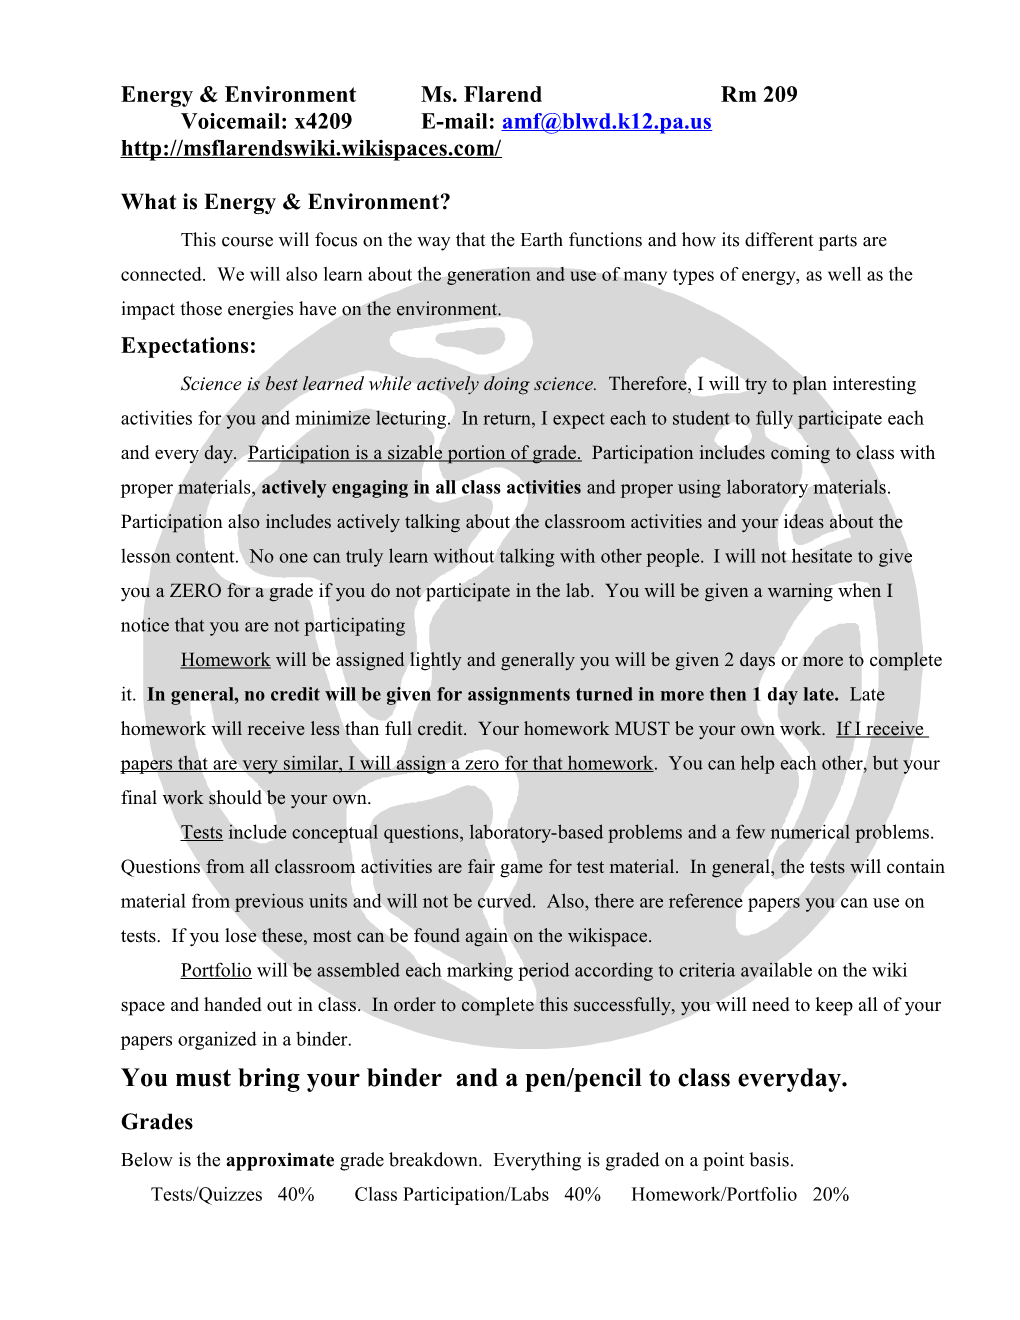 Energy and Enviro Syllabus 2014